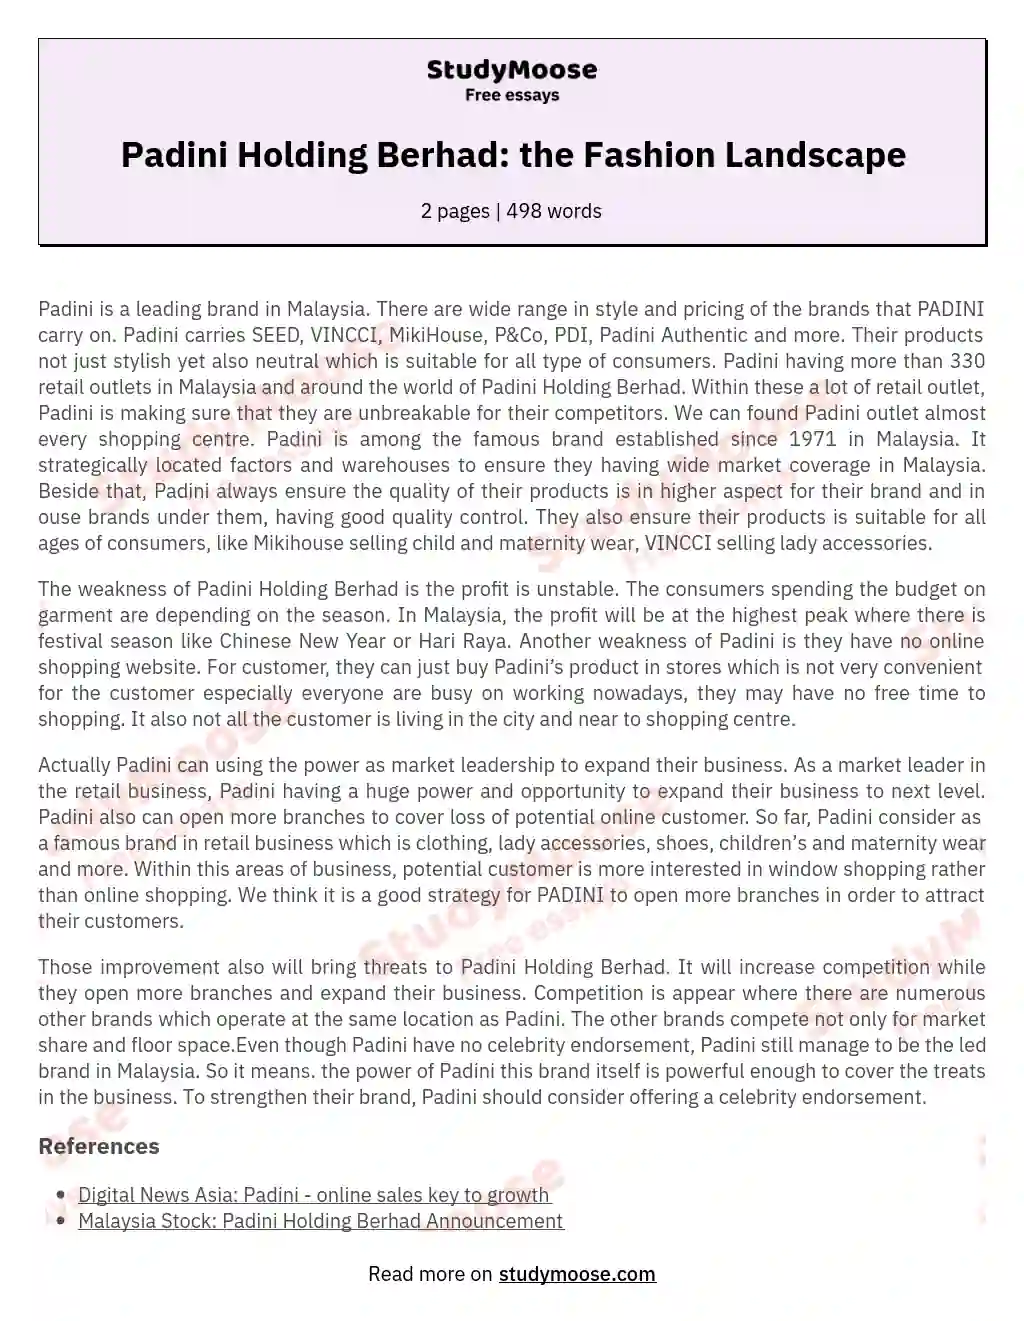 Padini Holding Berhad: the Fashion Landscape essay